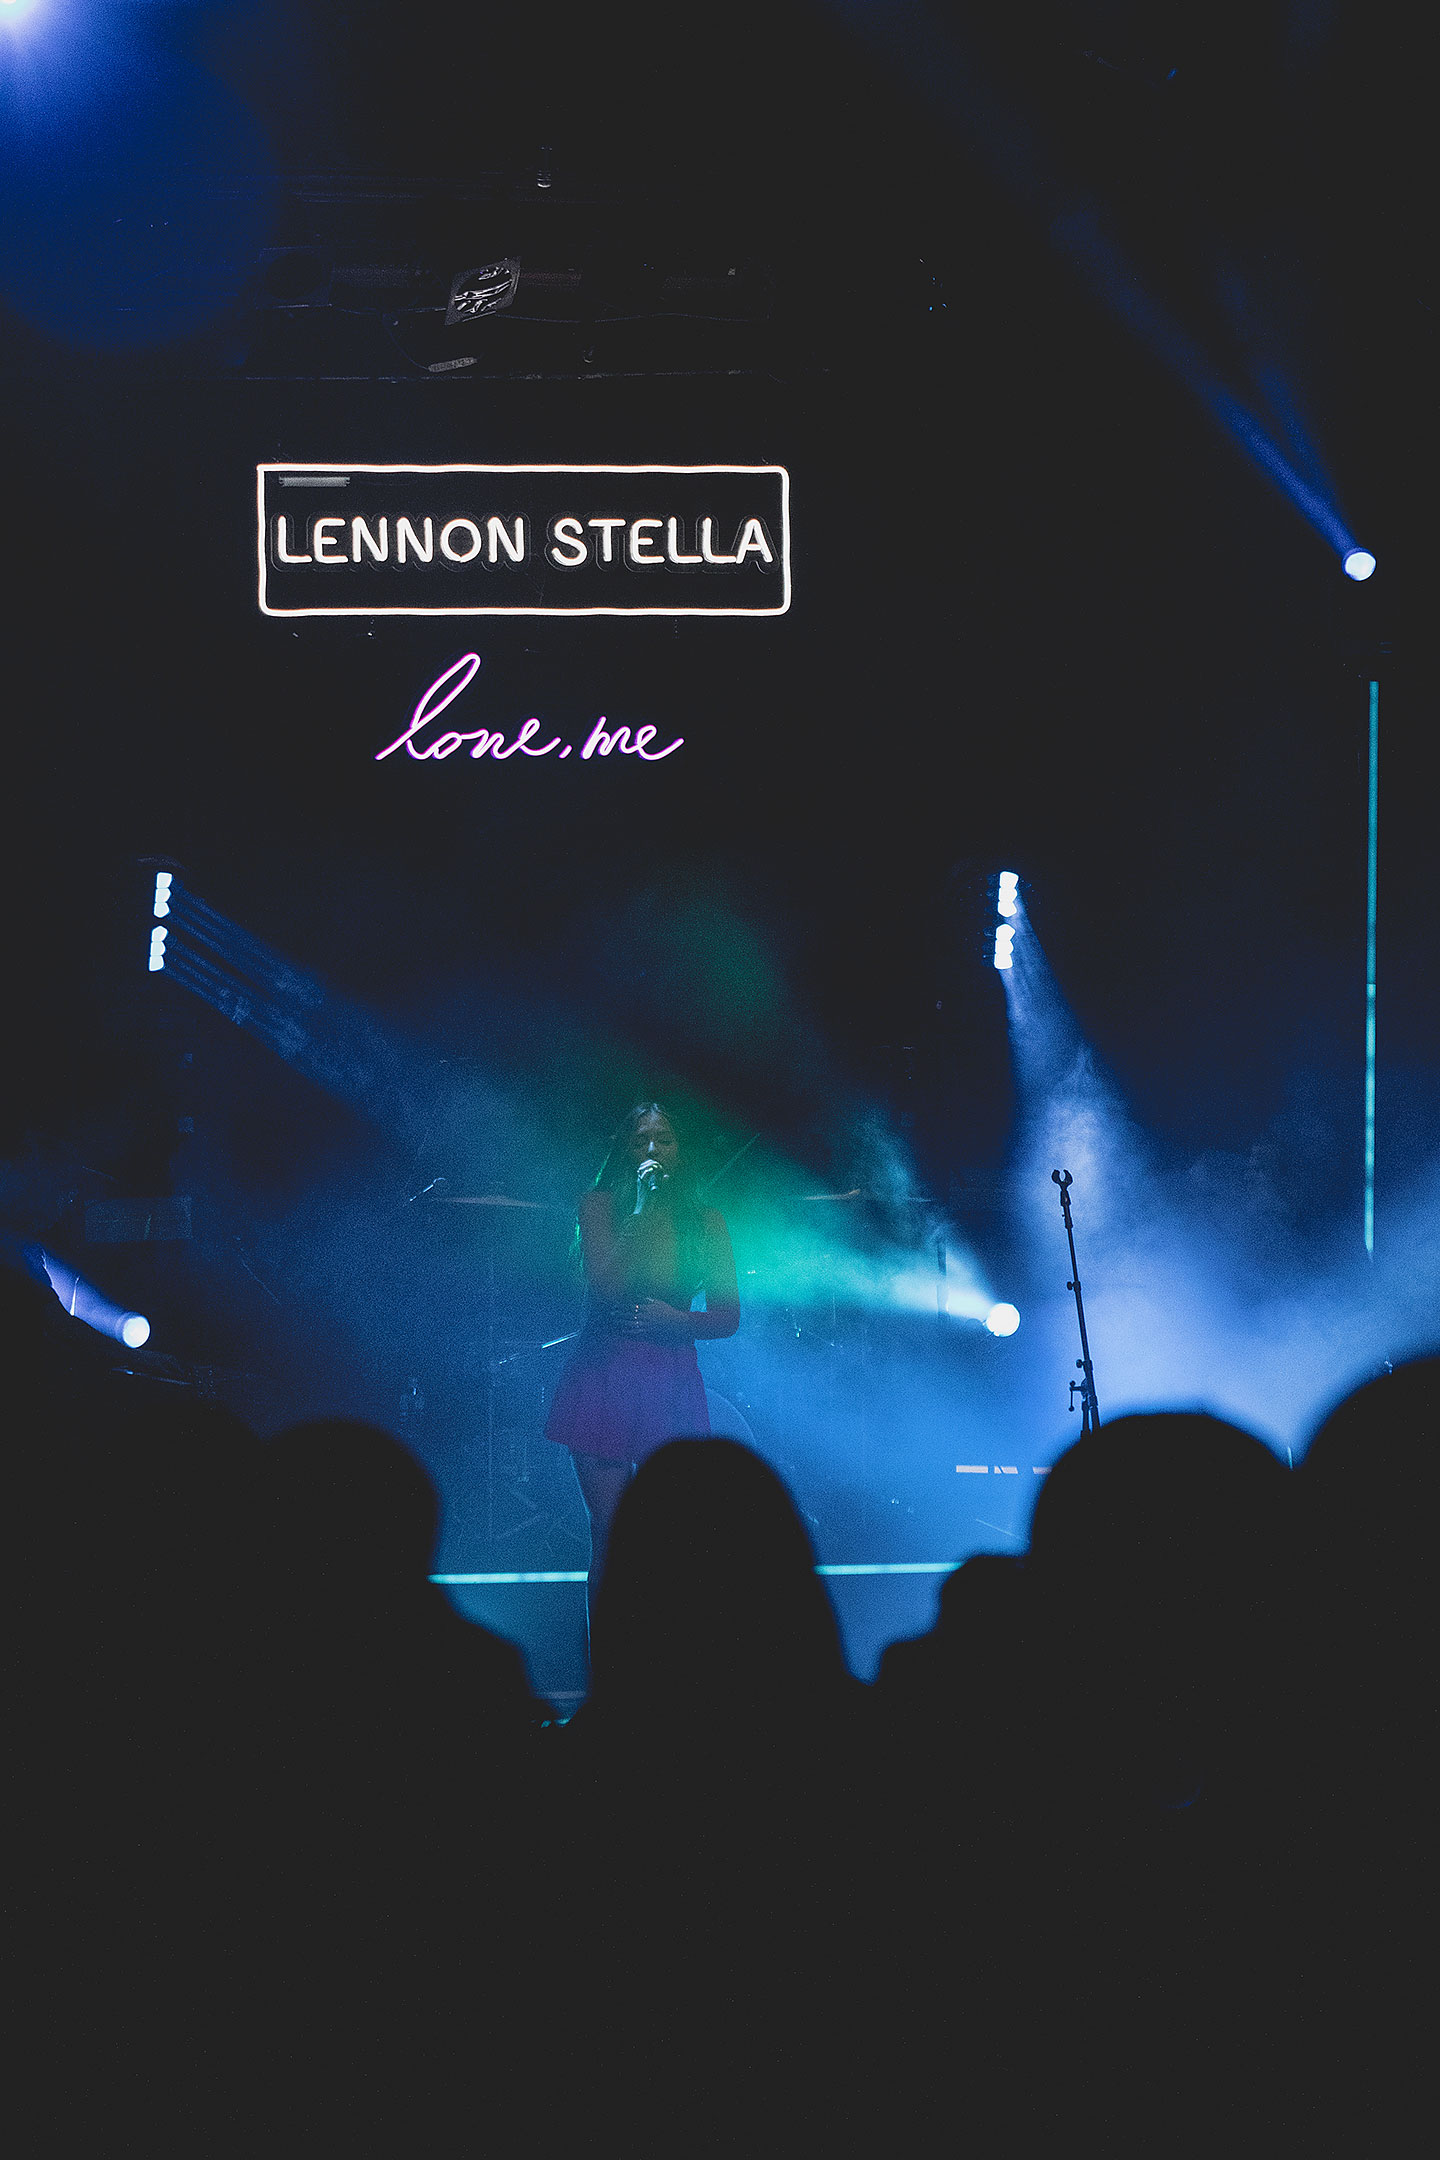 Lennon Stella and Valley - Ogden Theatre - Denver Concert Photos